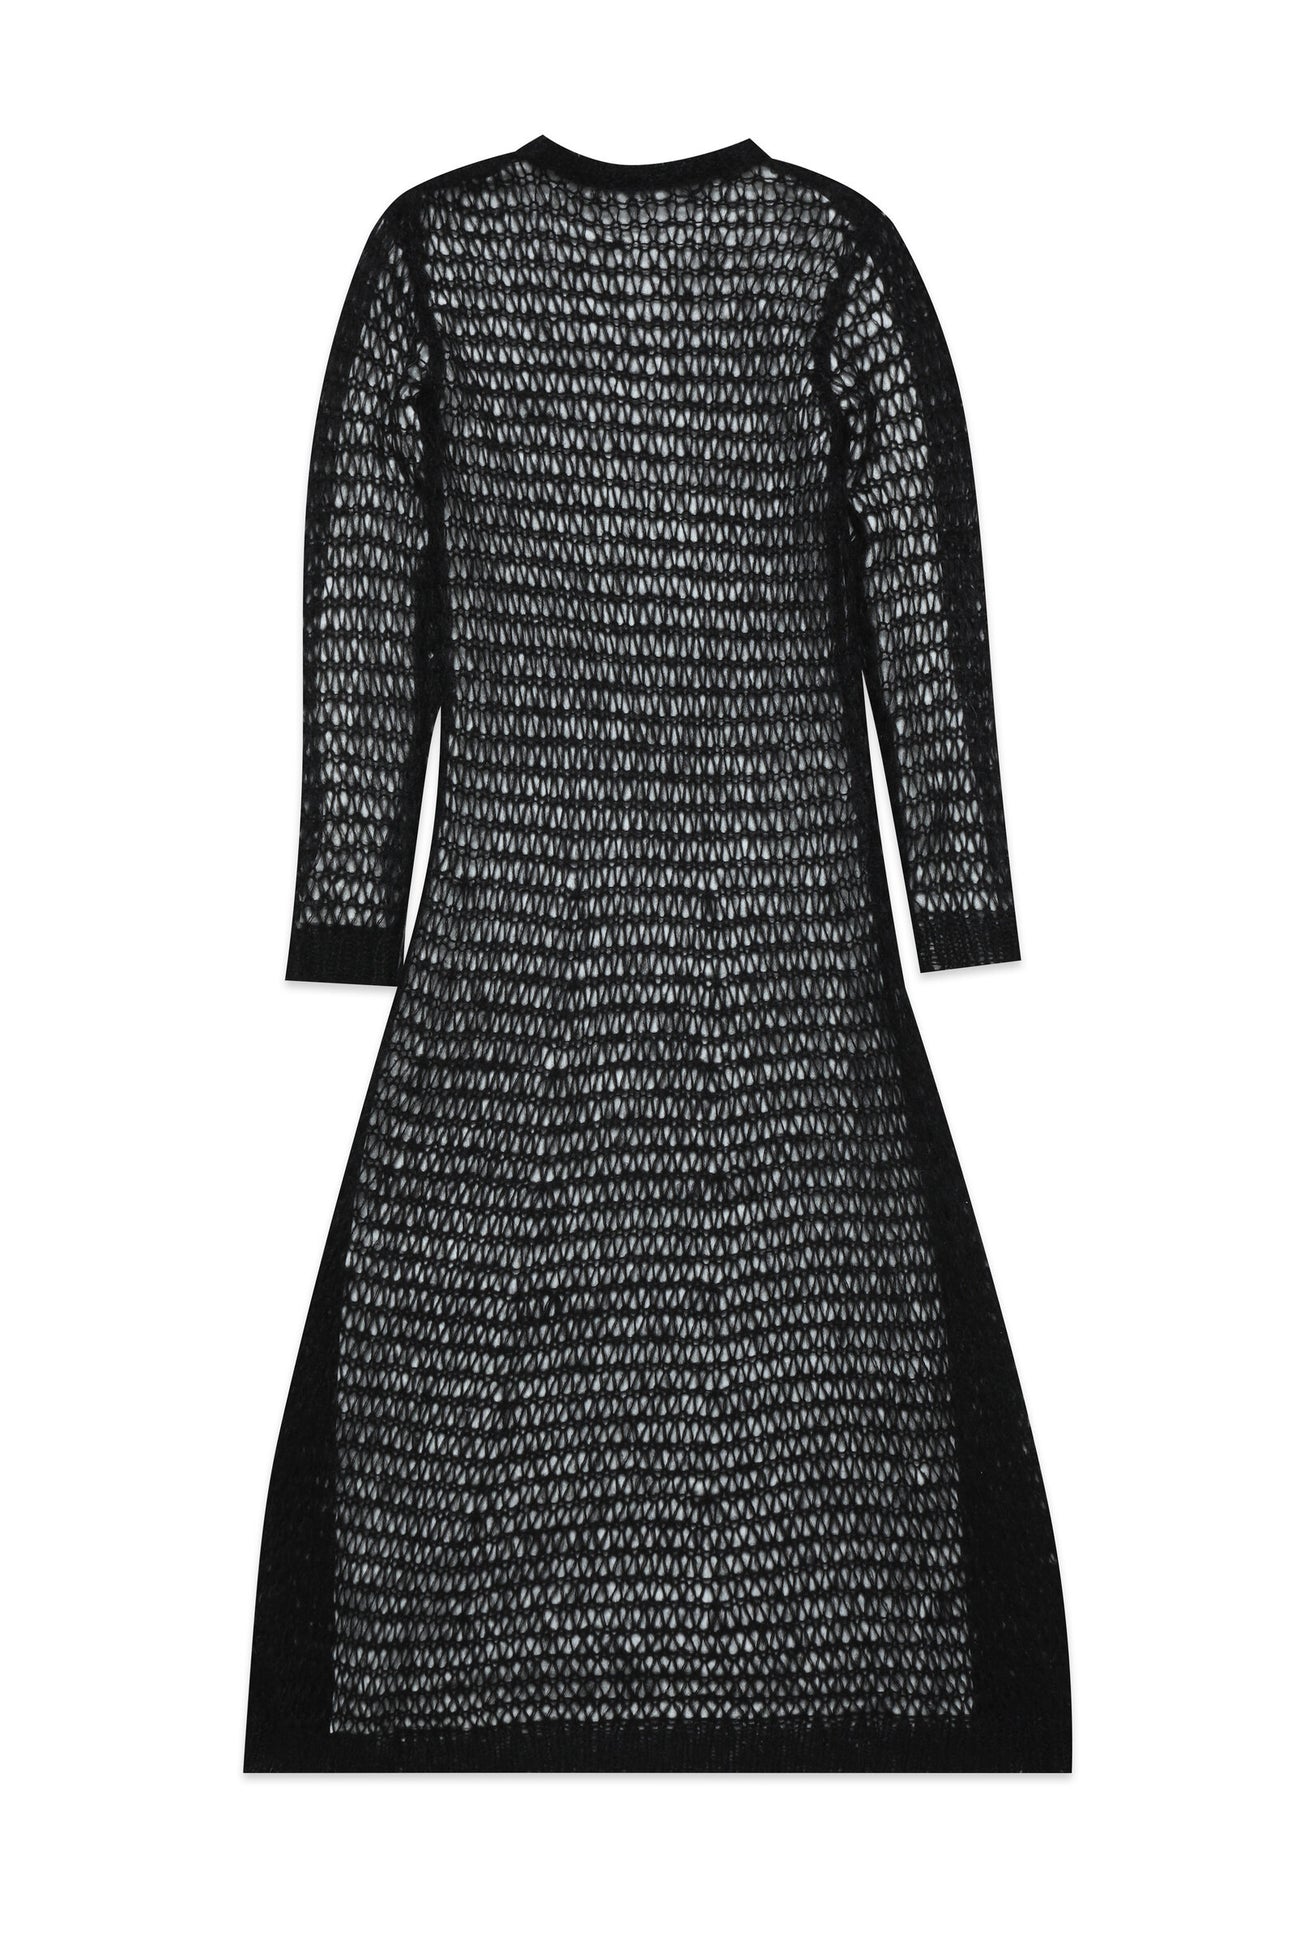 Long, loose-knit dress in
mohair wool blend Long, loose-knit dress in
mohair wool blend